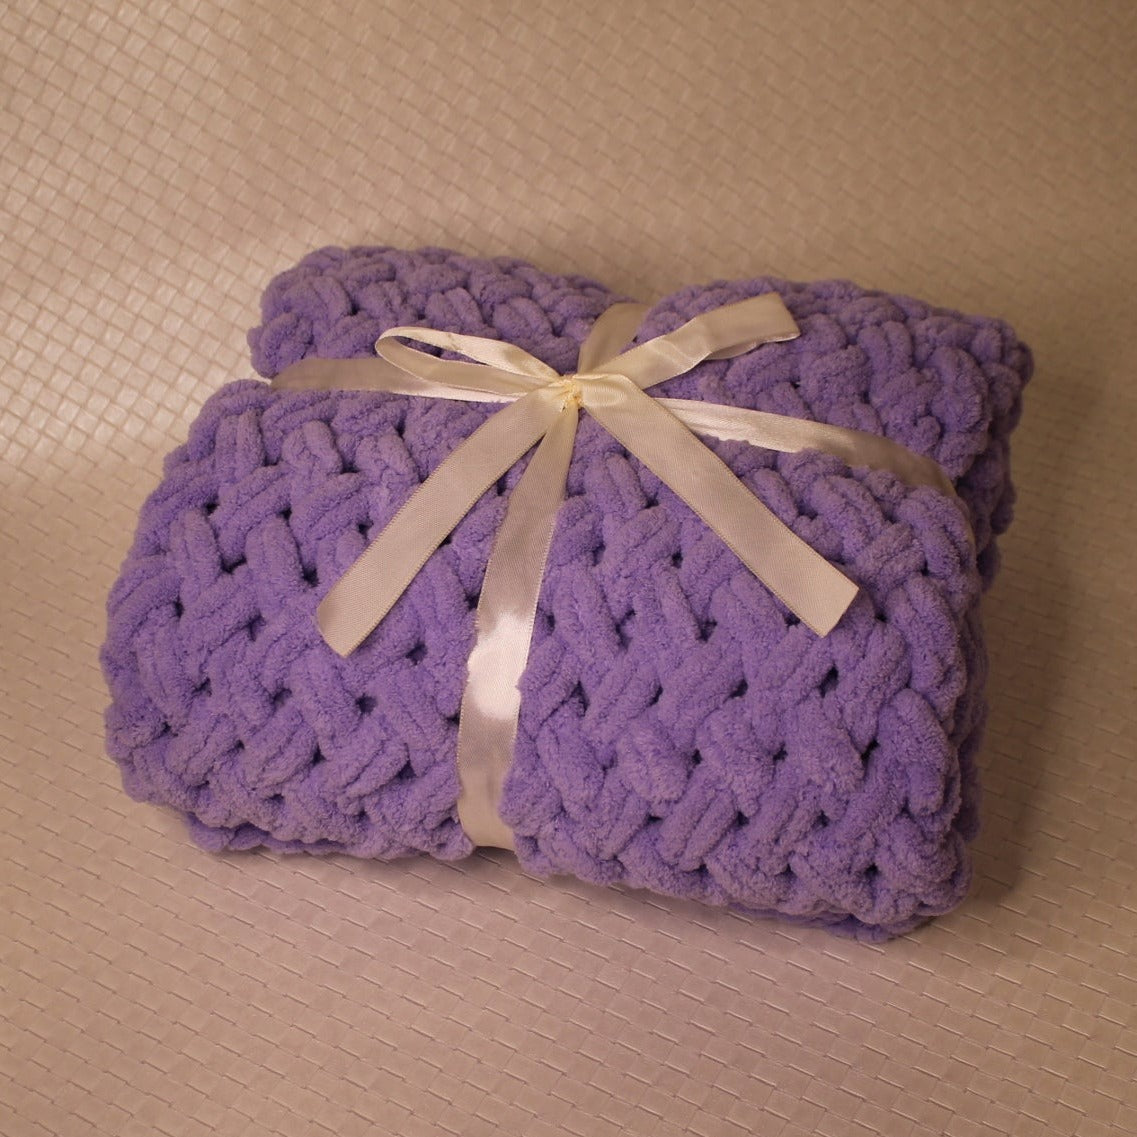 Children's plush plaid in the color of lavender